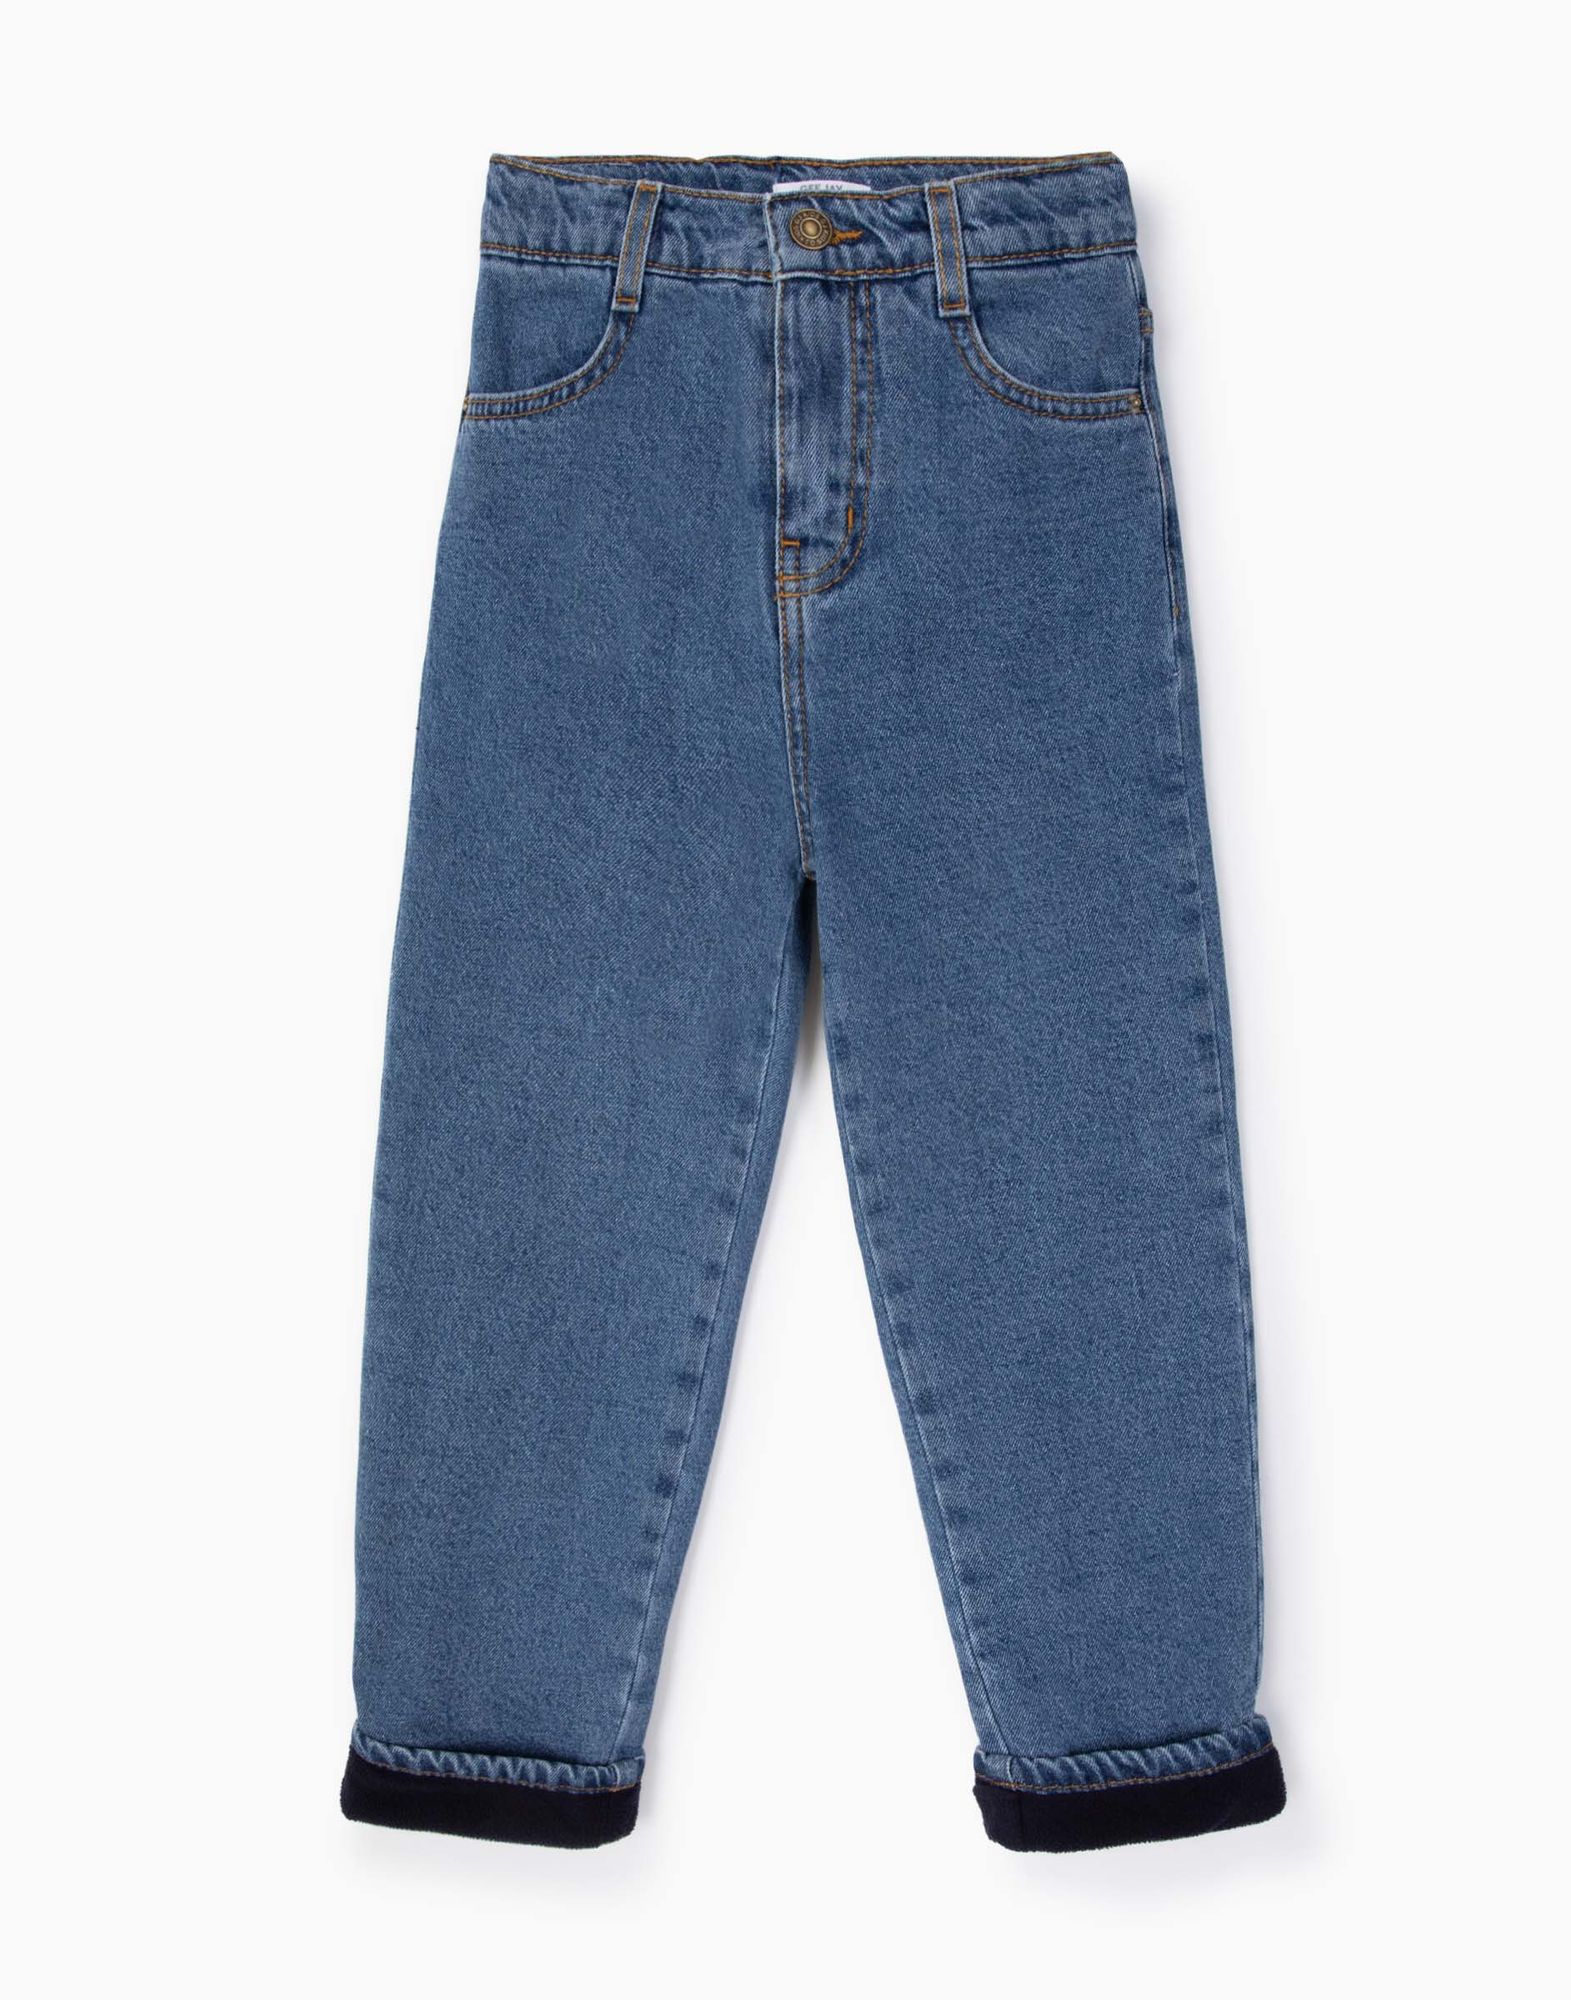 Утеплённые джинсы Straight для мальчика -1